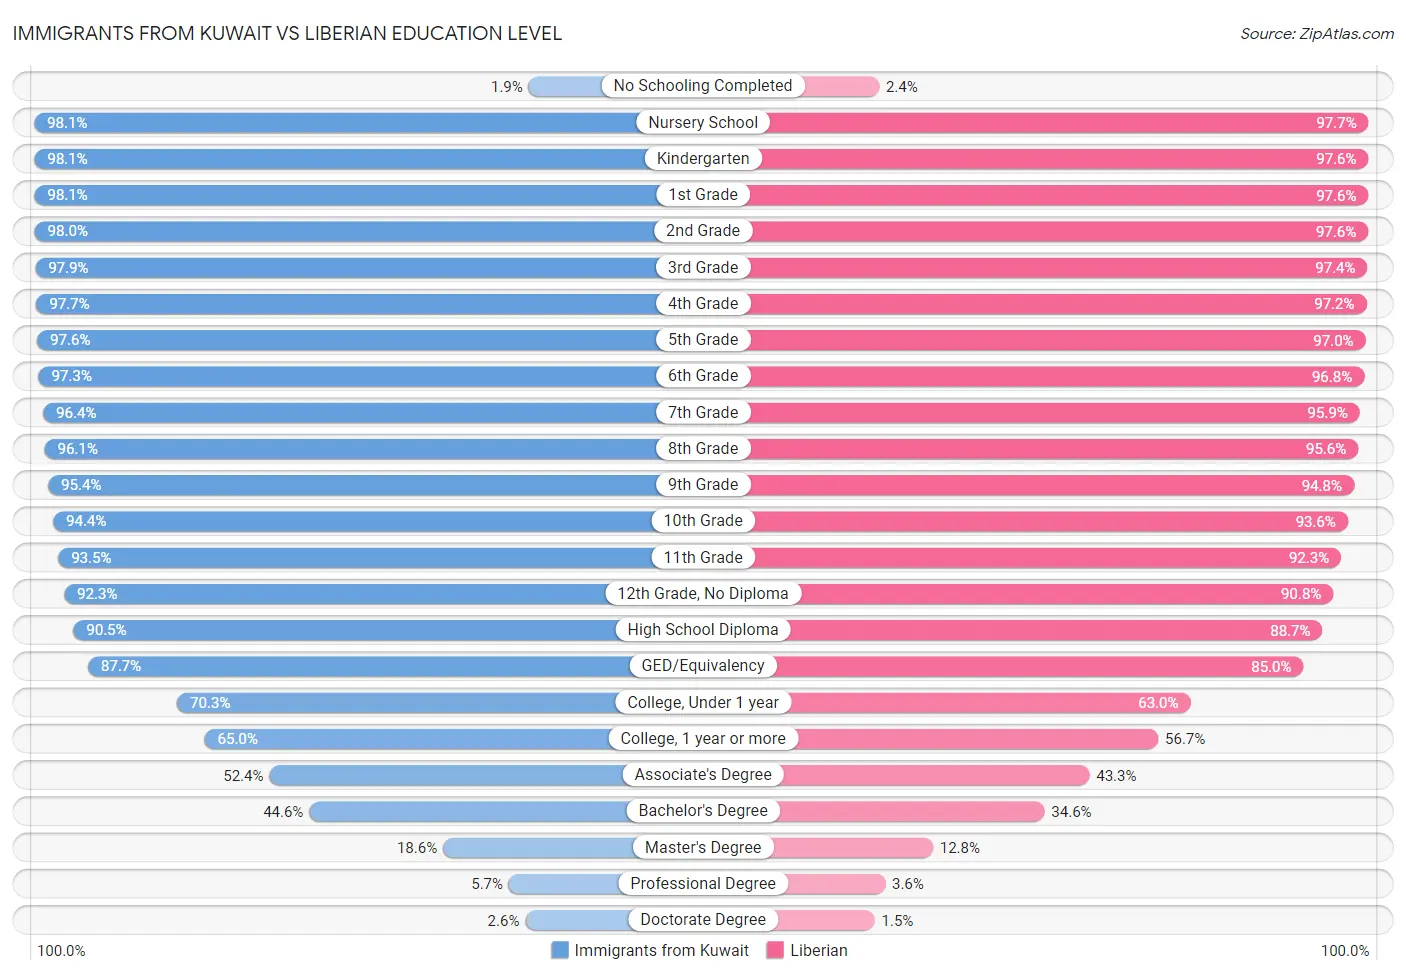 Immigrants from Kuwait vs Liberian Education Level